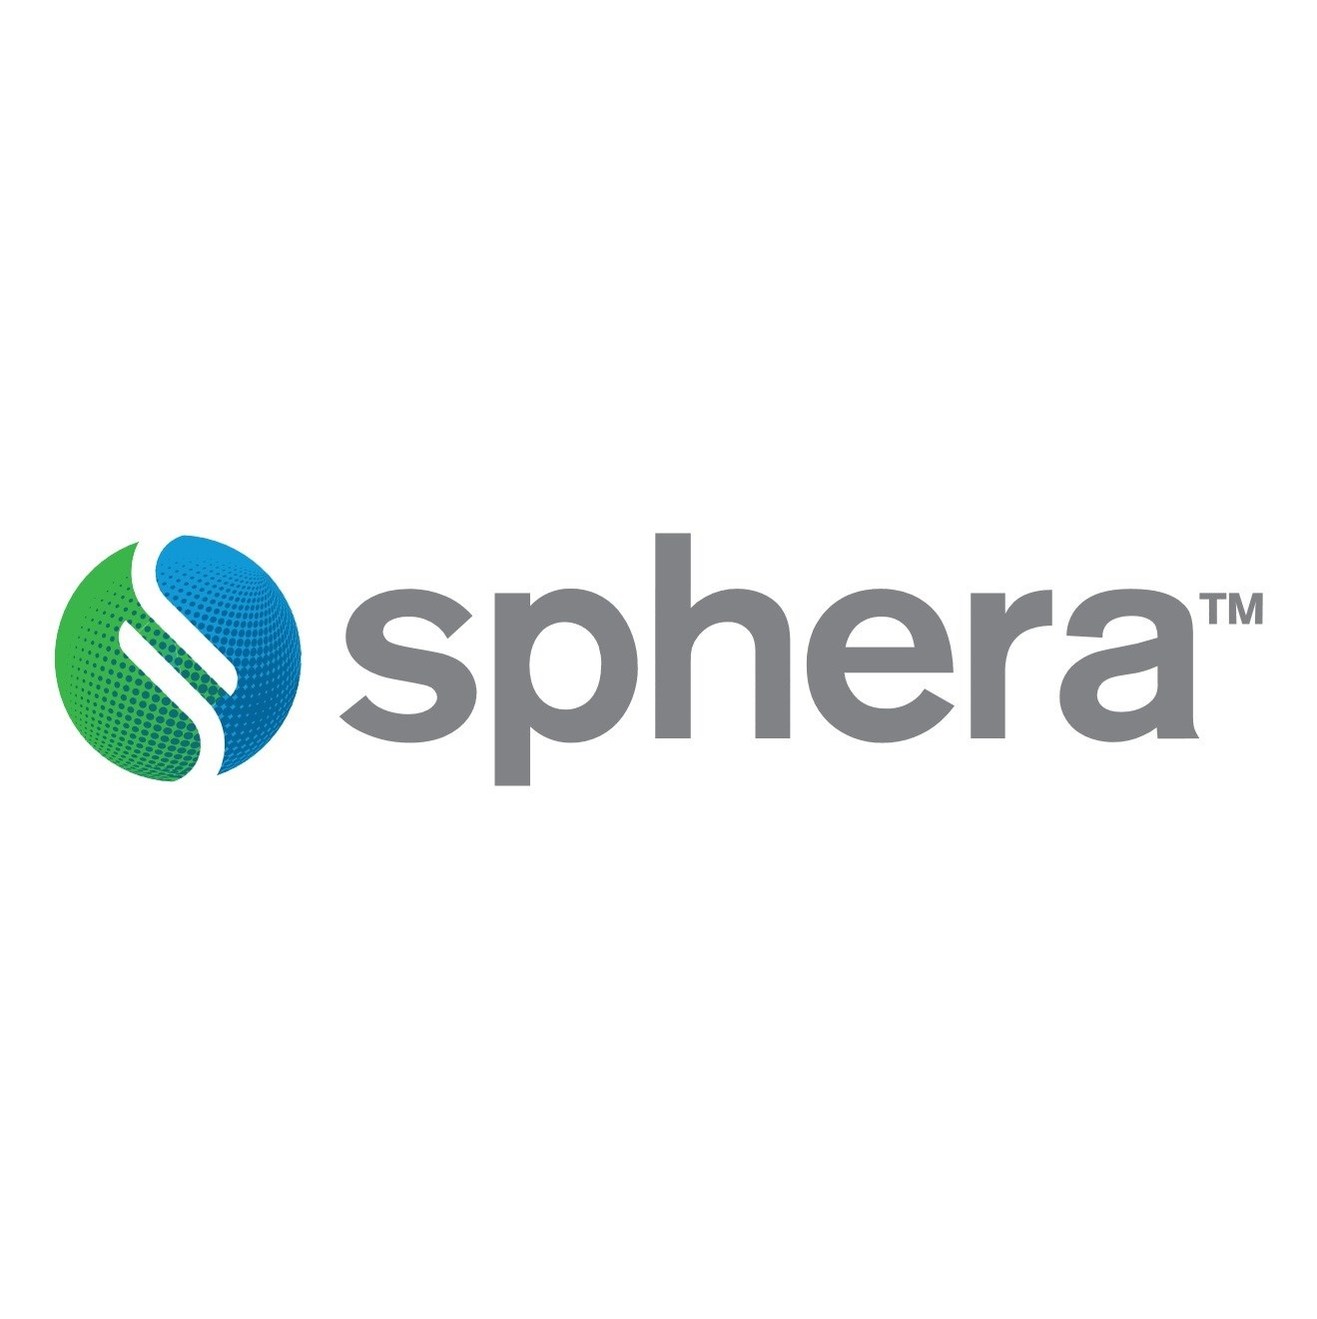 sphera-logo